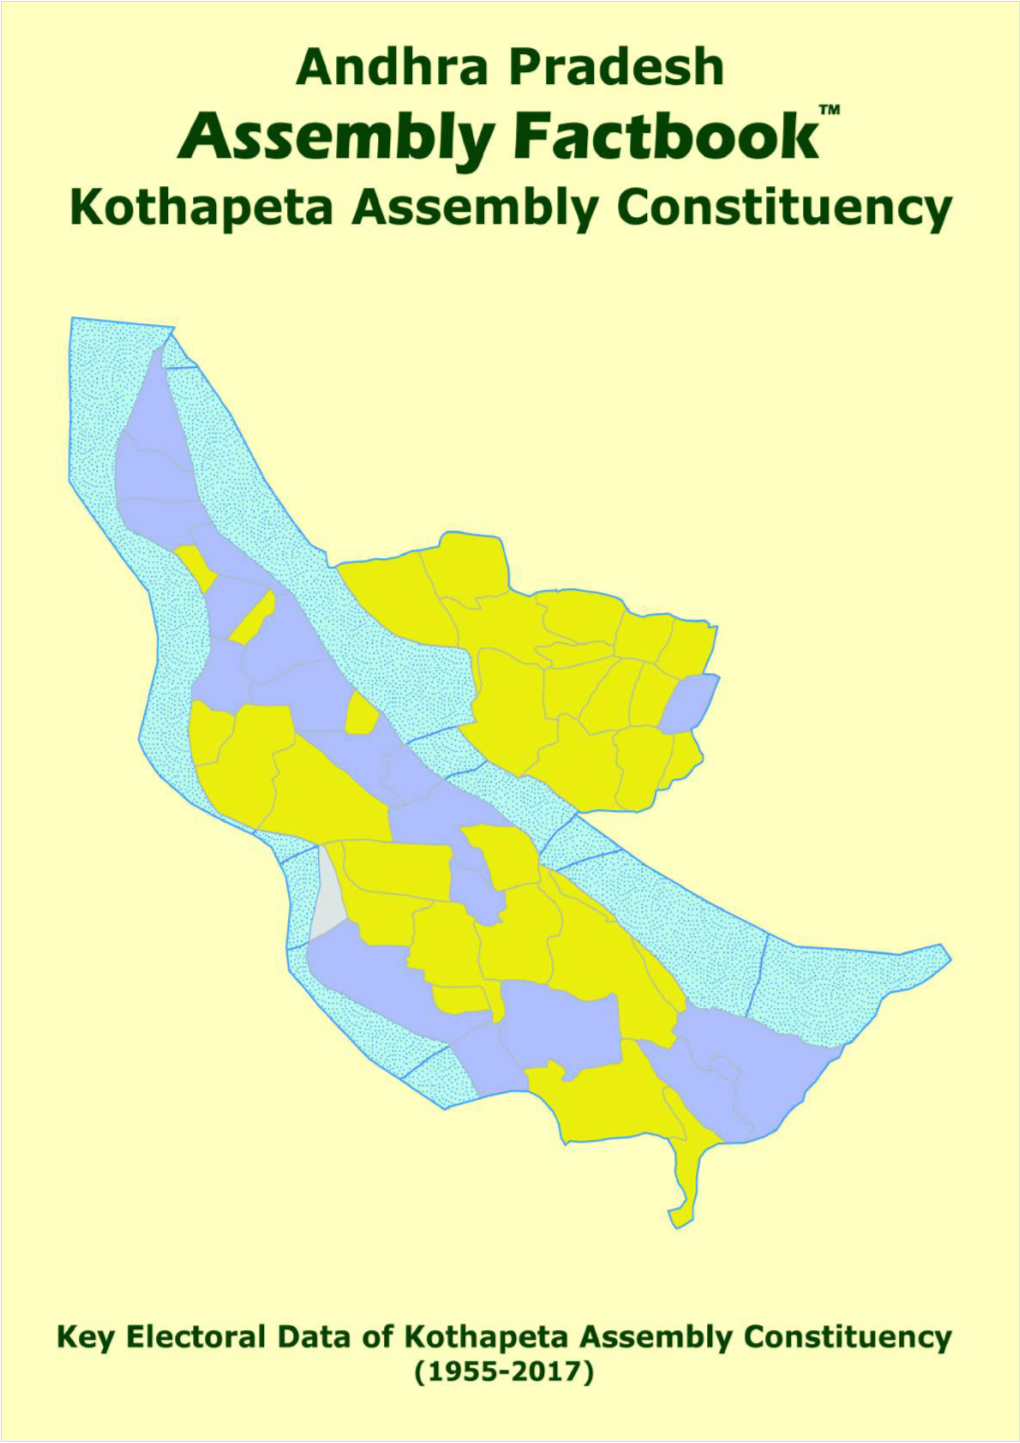 Kothapeta Assembly Andhra Pradesh Factbook